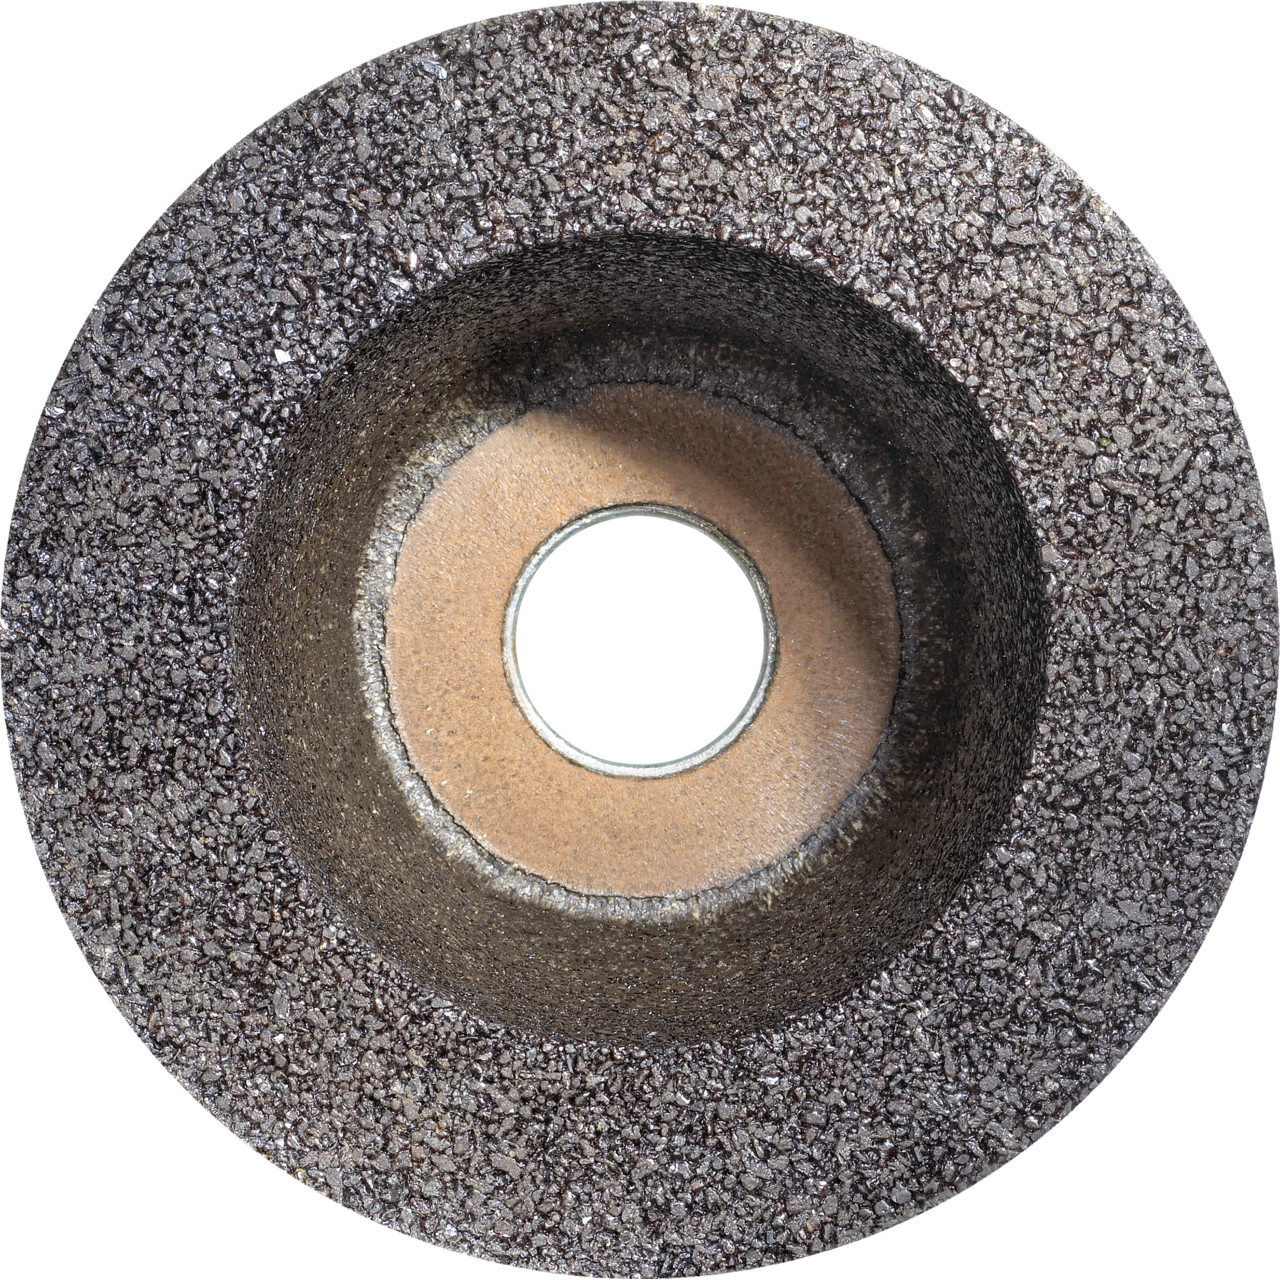 Taza de resina sintética TYROLIT D/JxDxH 110/90x55x22,23 Para acero, forma: rueda de taza 11BT, Art. 311096